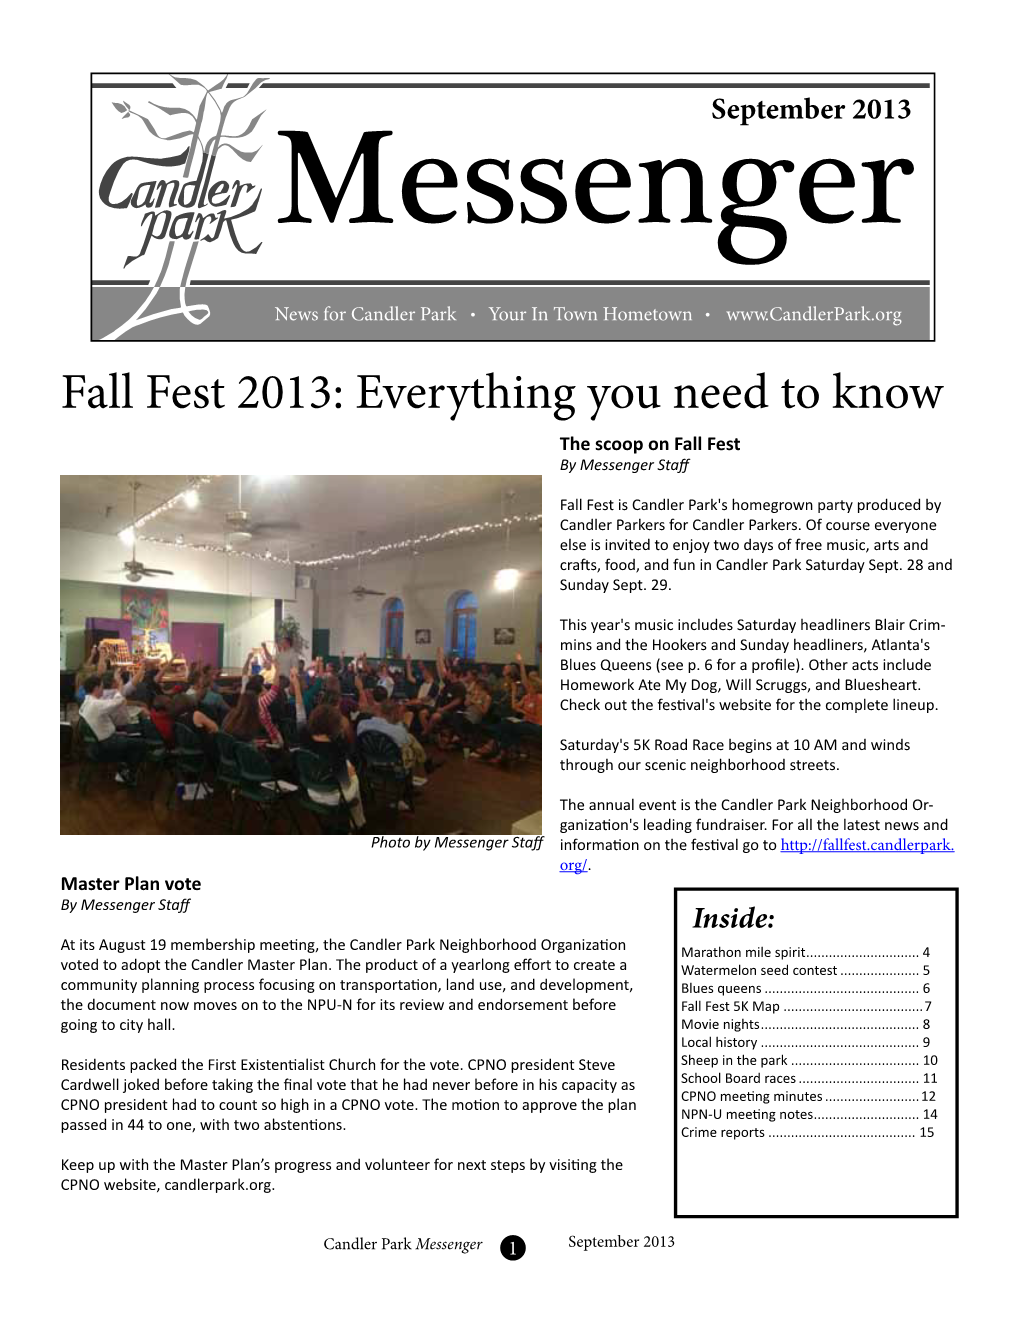 Candler Park Messenger: September 2013 (Corrected)